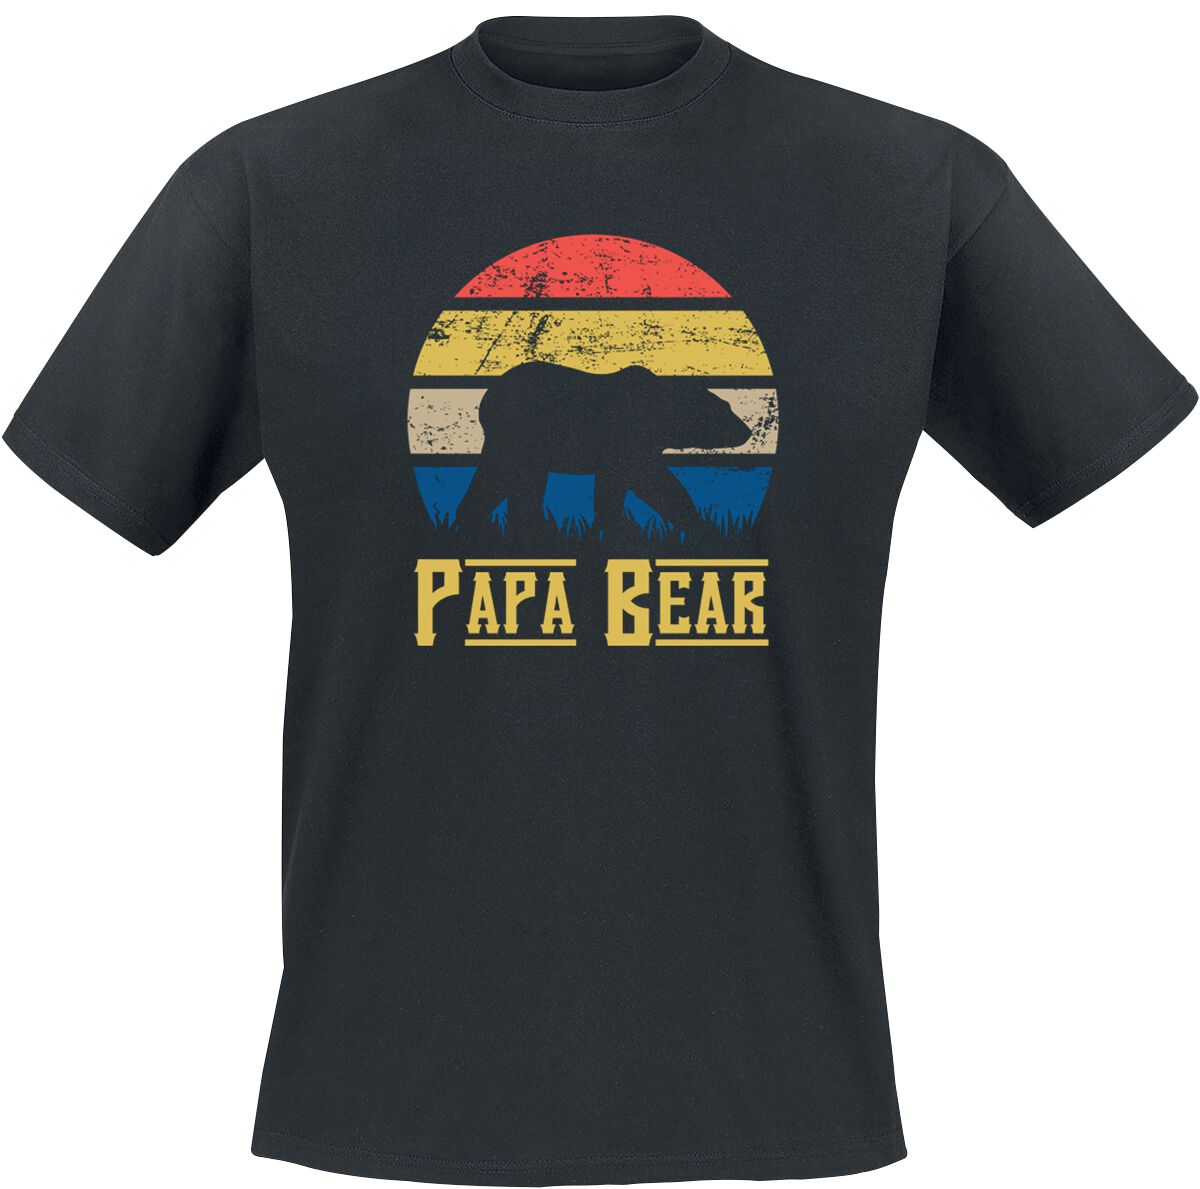 Familie & Freunde Papa Bear T-Shirt schwarz in M